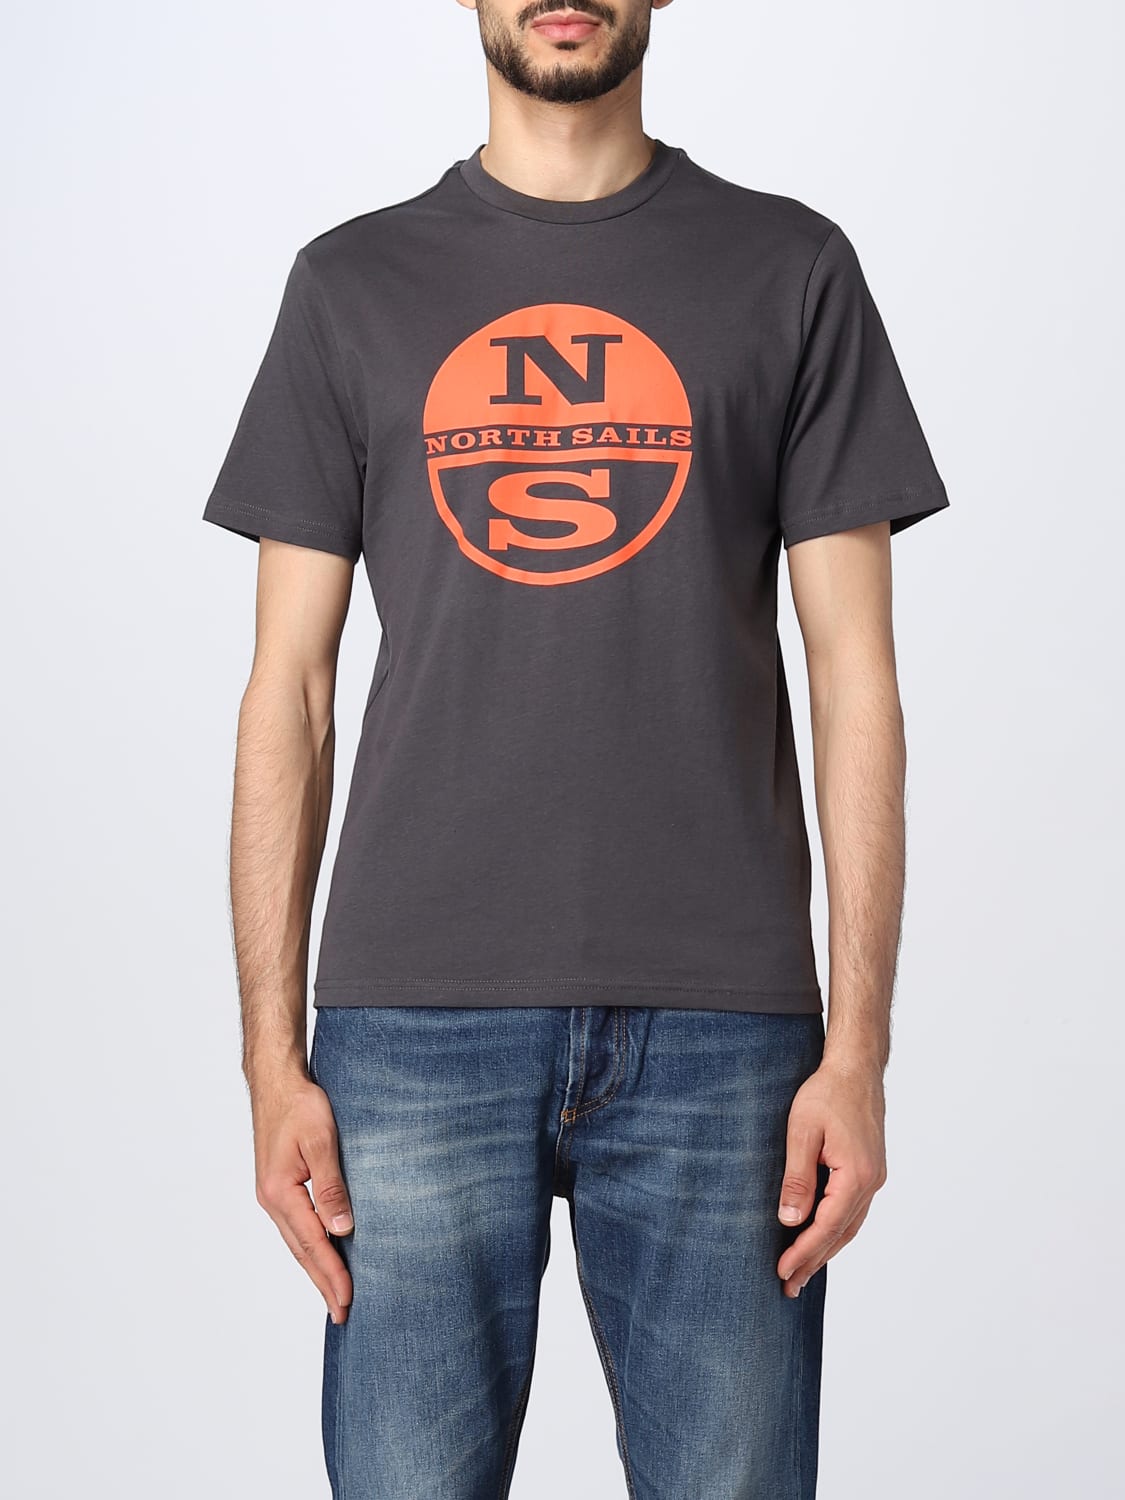 NORTH SAILS: t-shirt for man - Grey | North Sails t-shirt 692837 online ...